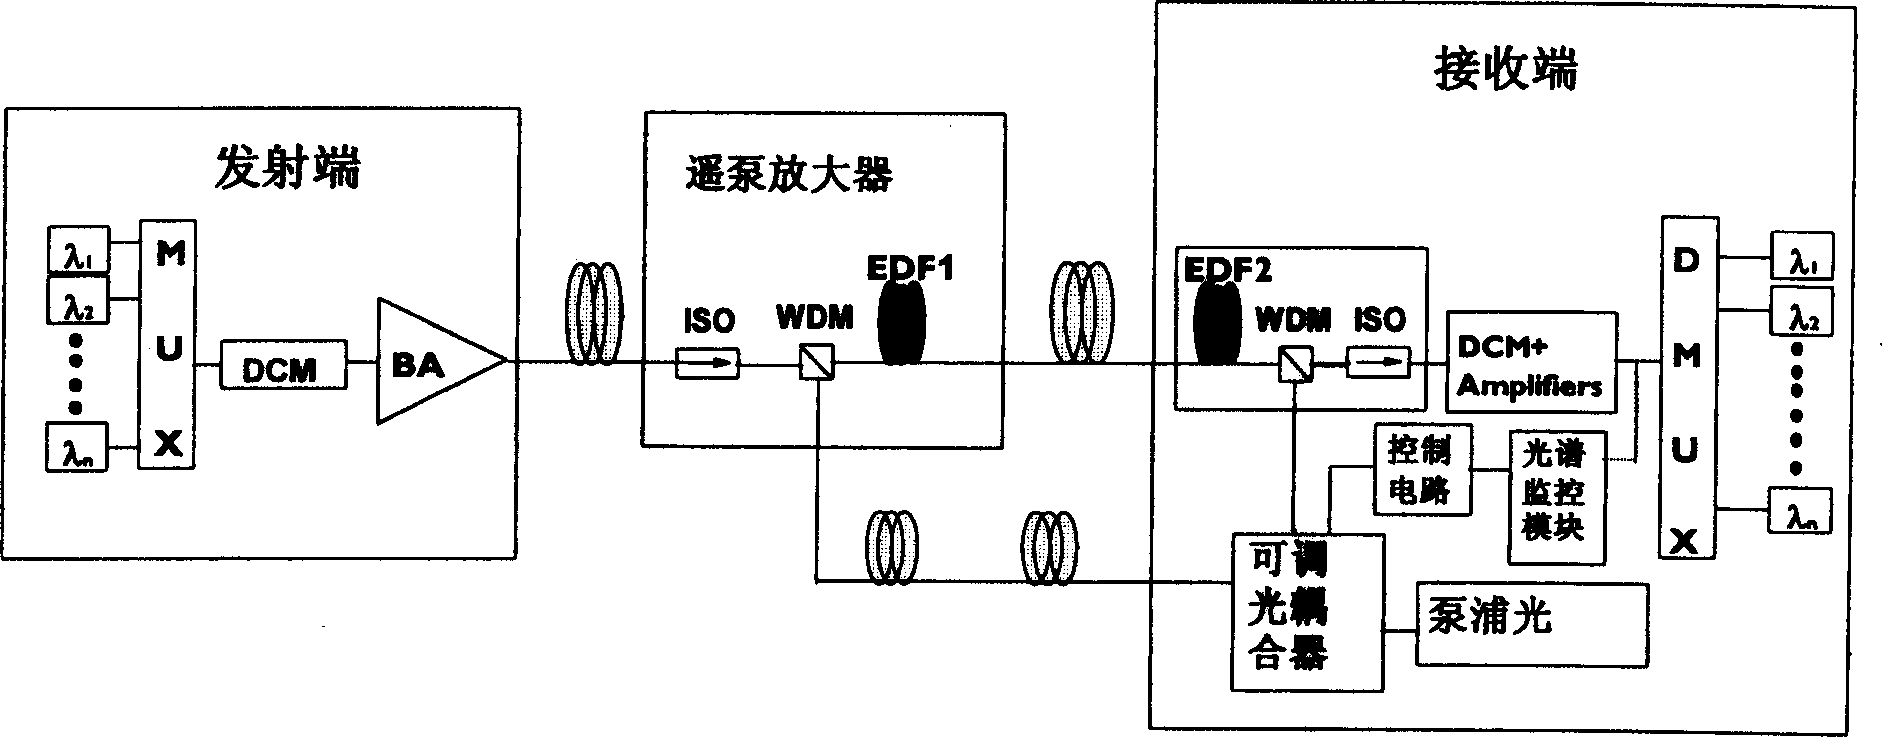 A remote pump transmission system